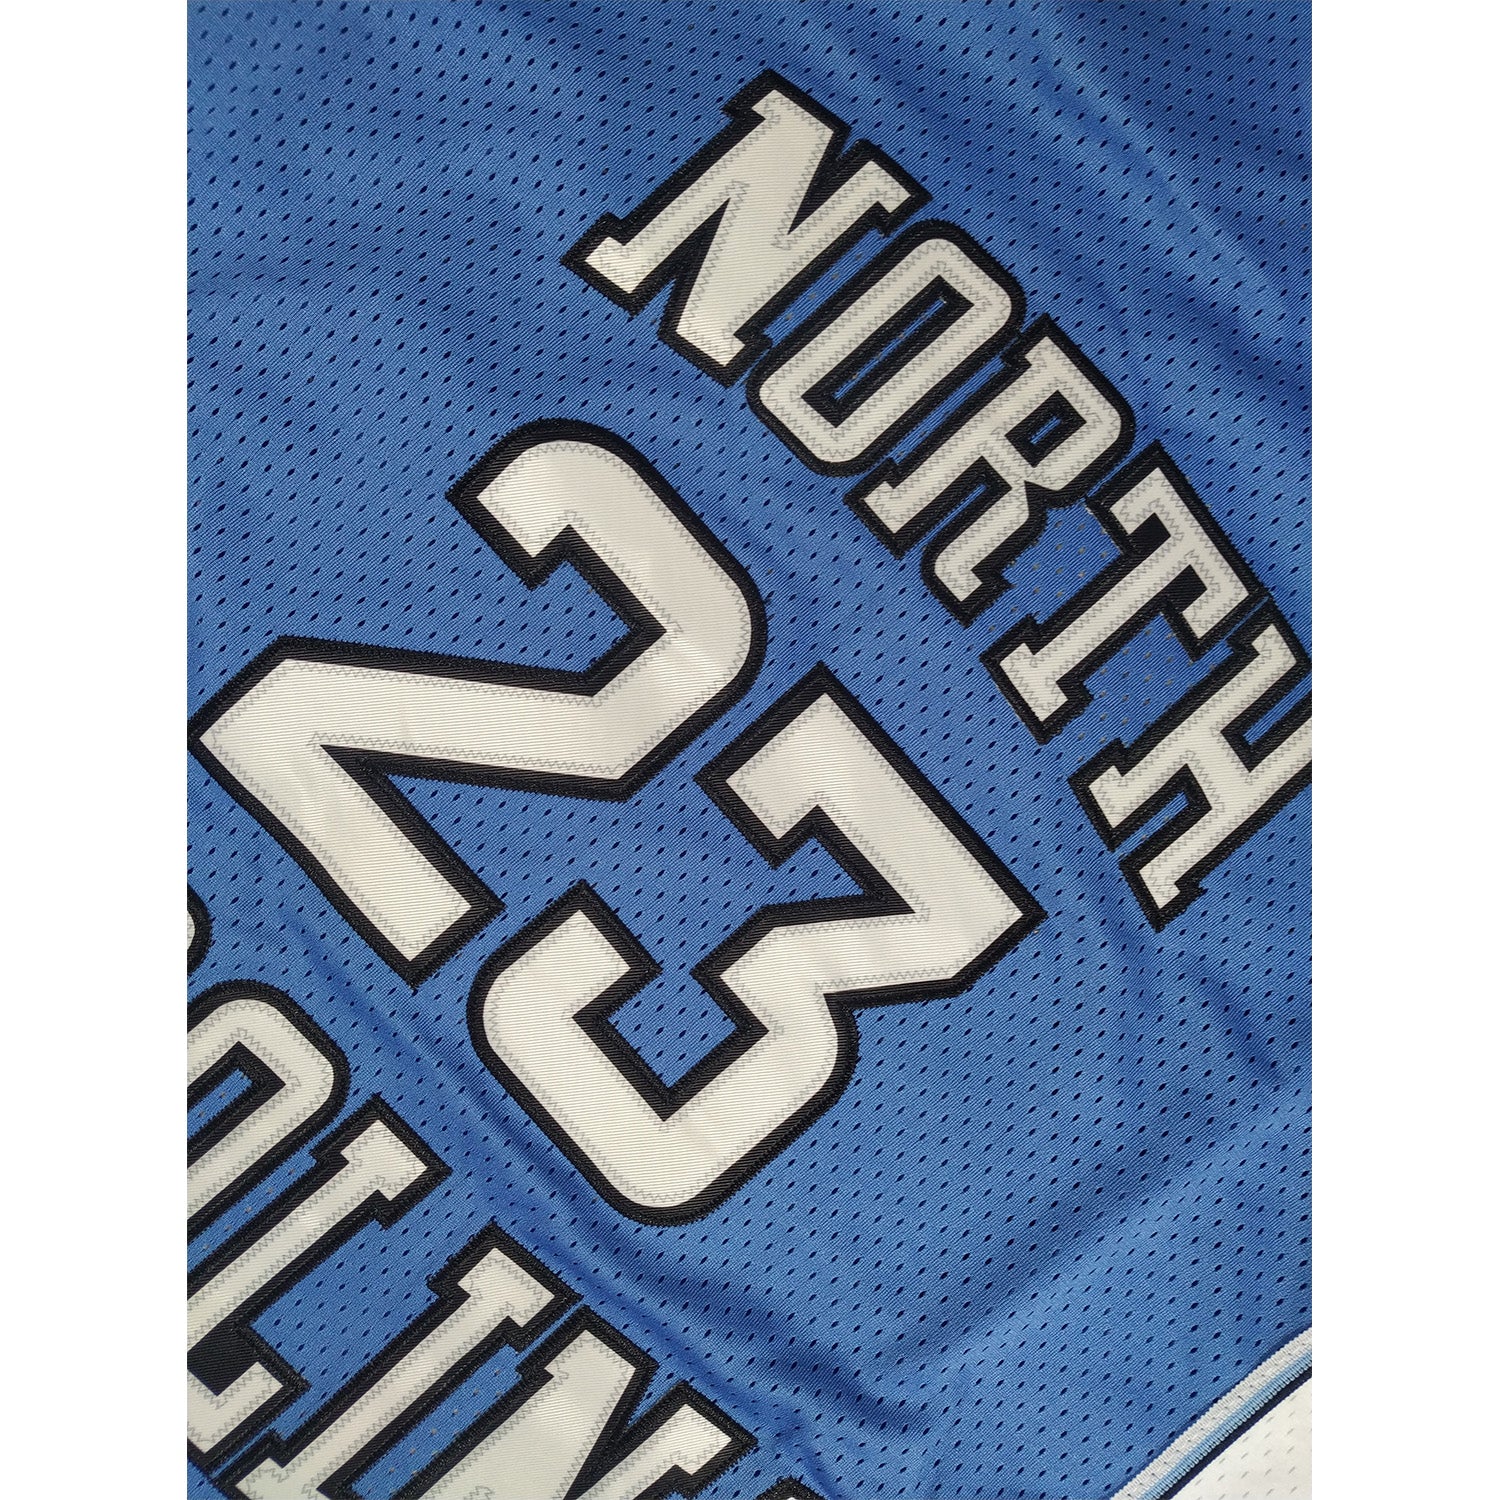 Men 23 Michael Jordan Jersey Blue North Carolina Tar Heels